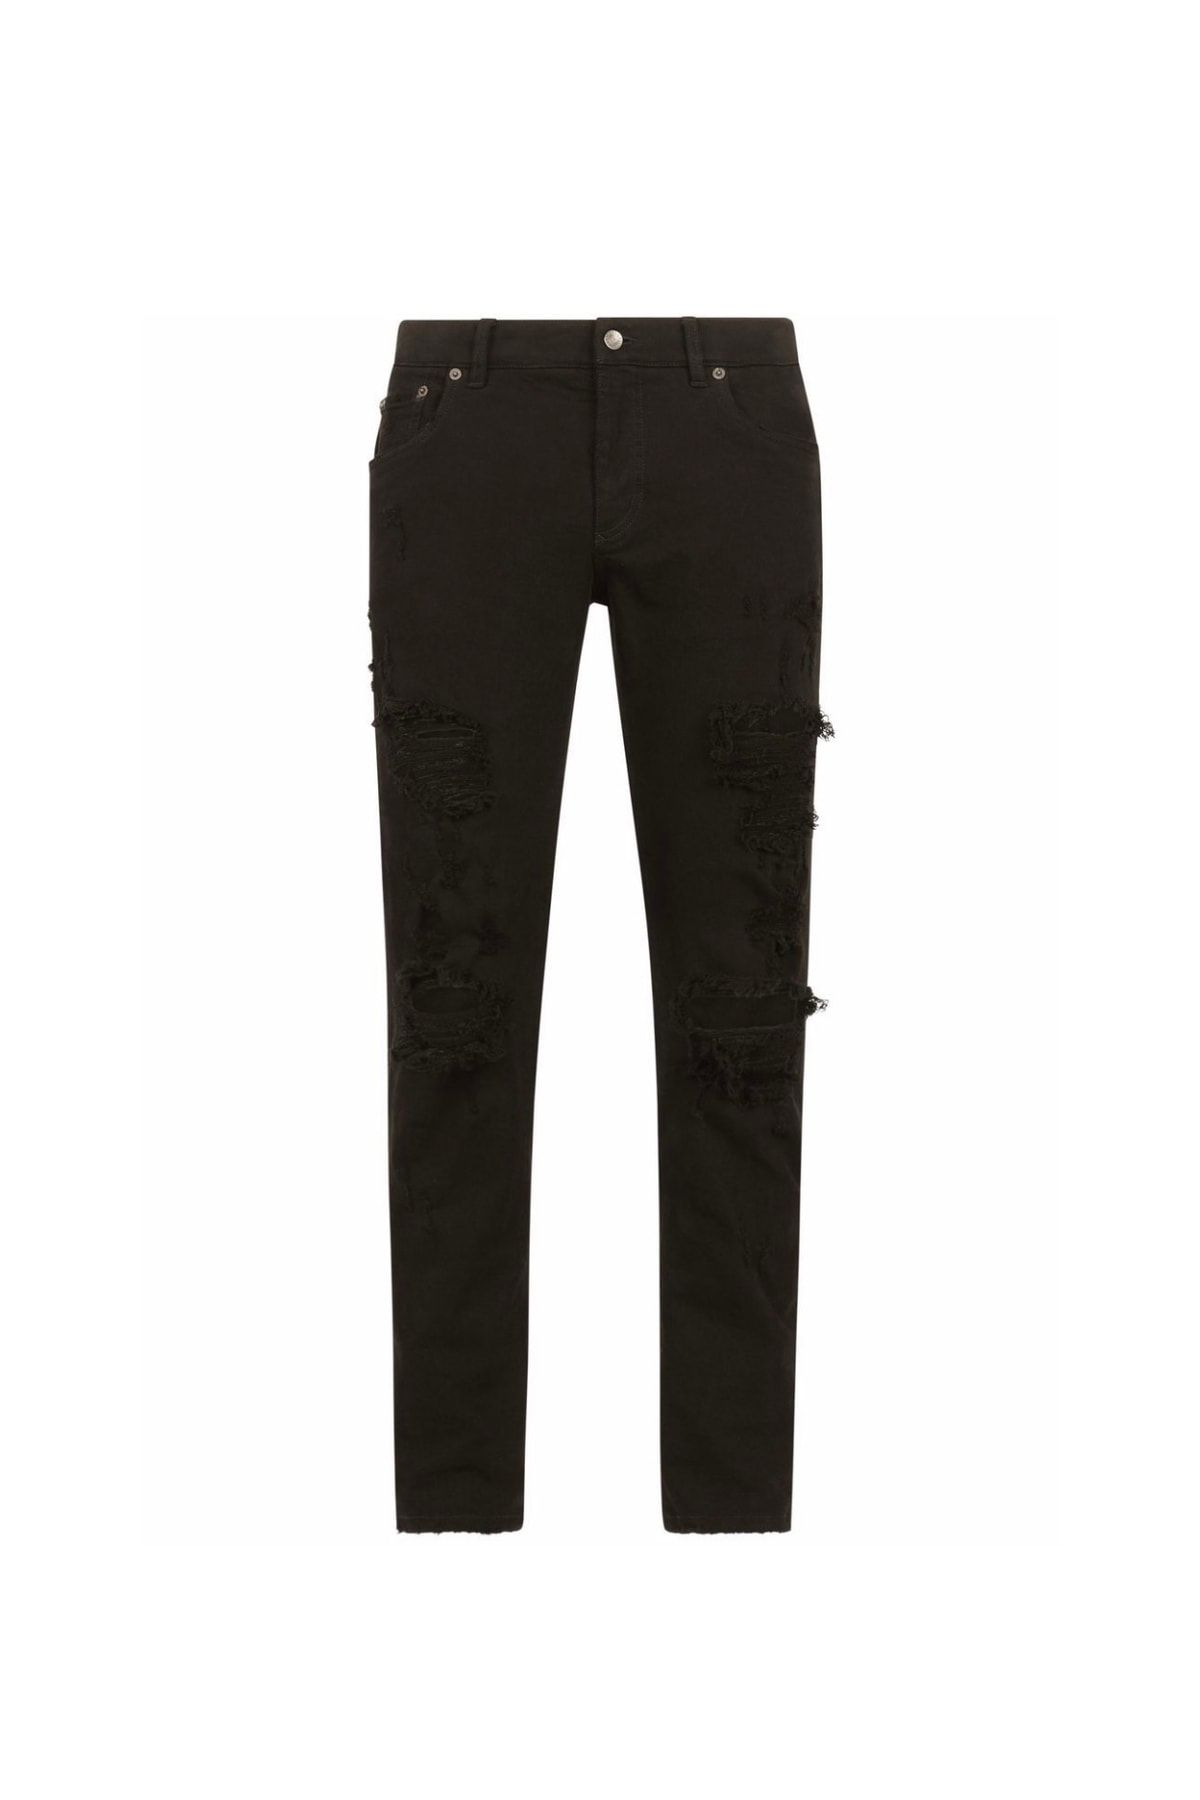 Dolce&Gabbana Distressed Effect Skinny Jeans